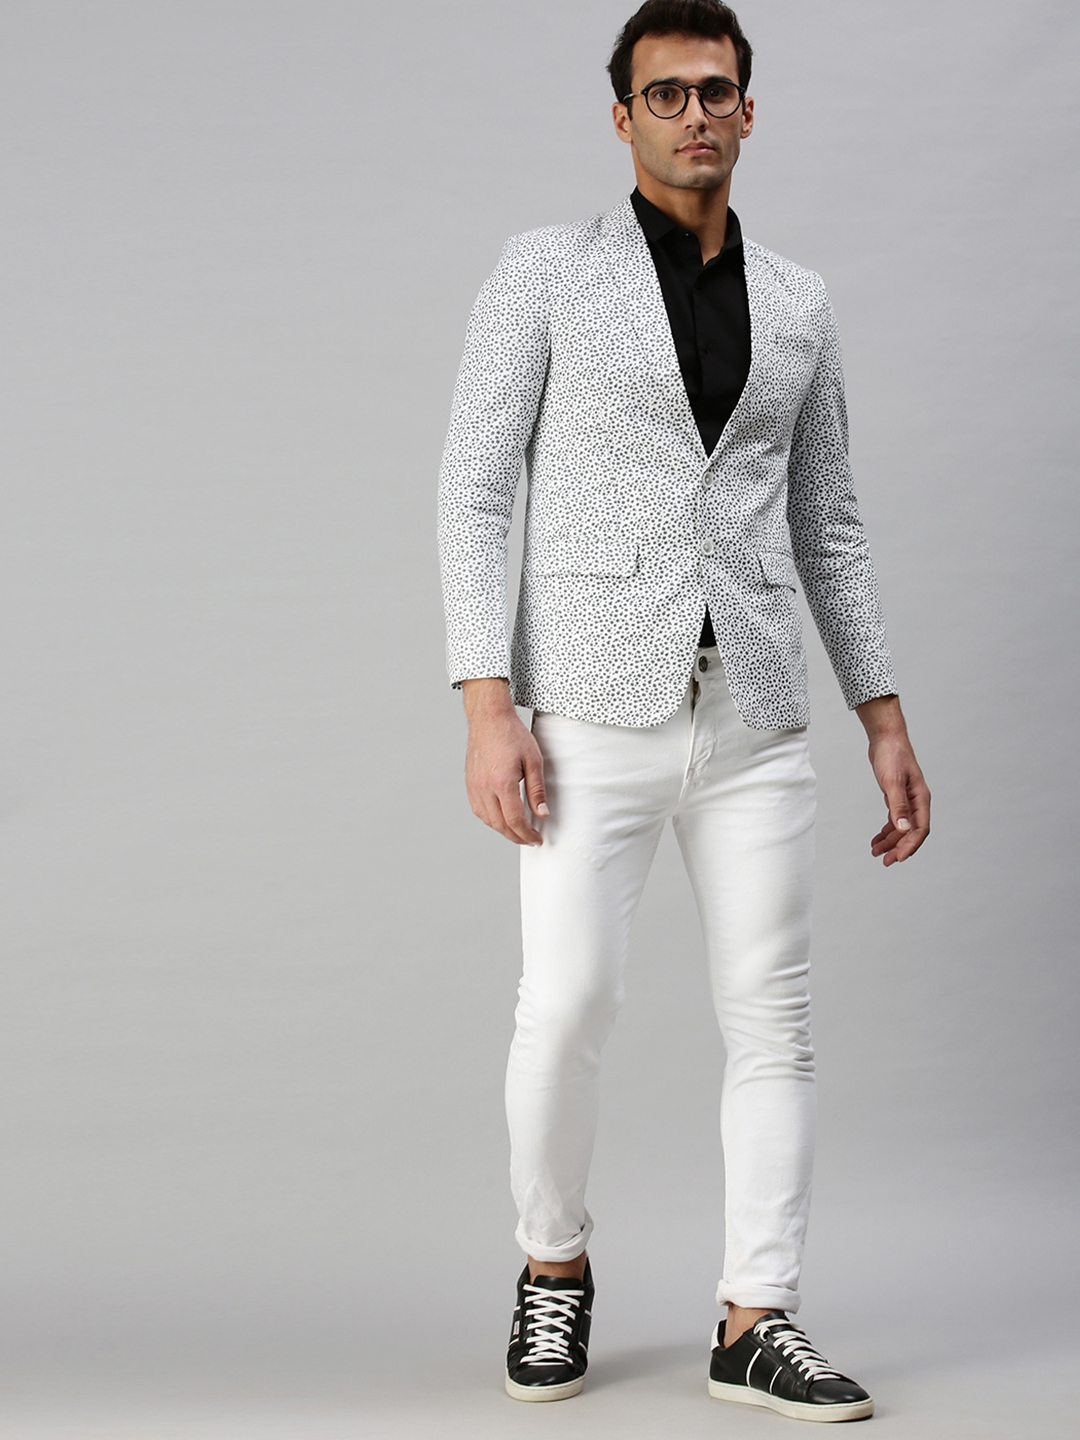 Men's White Cotton Blend Printed Blazers